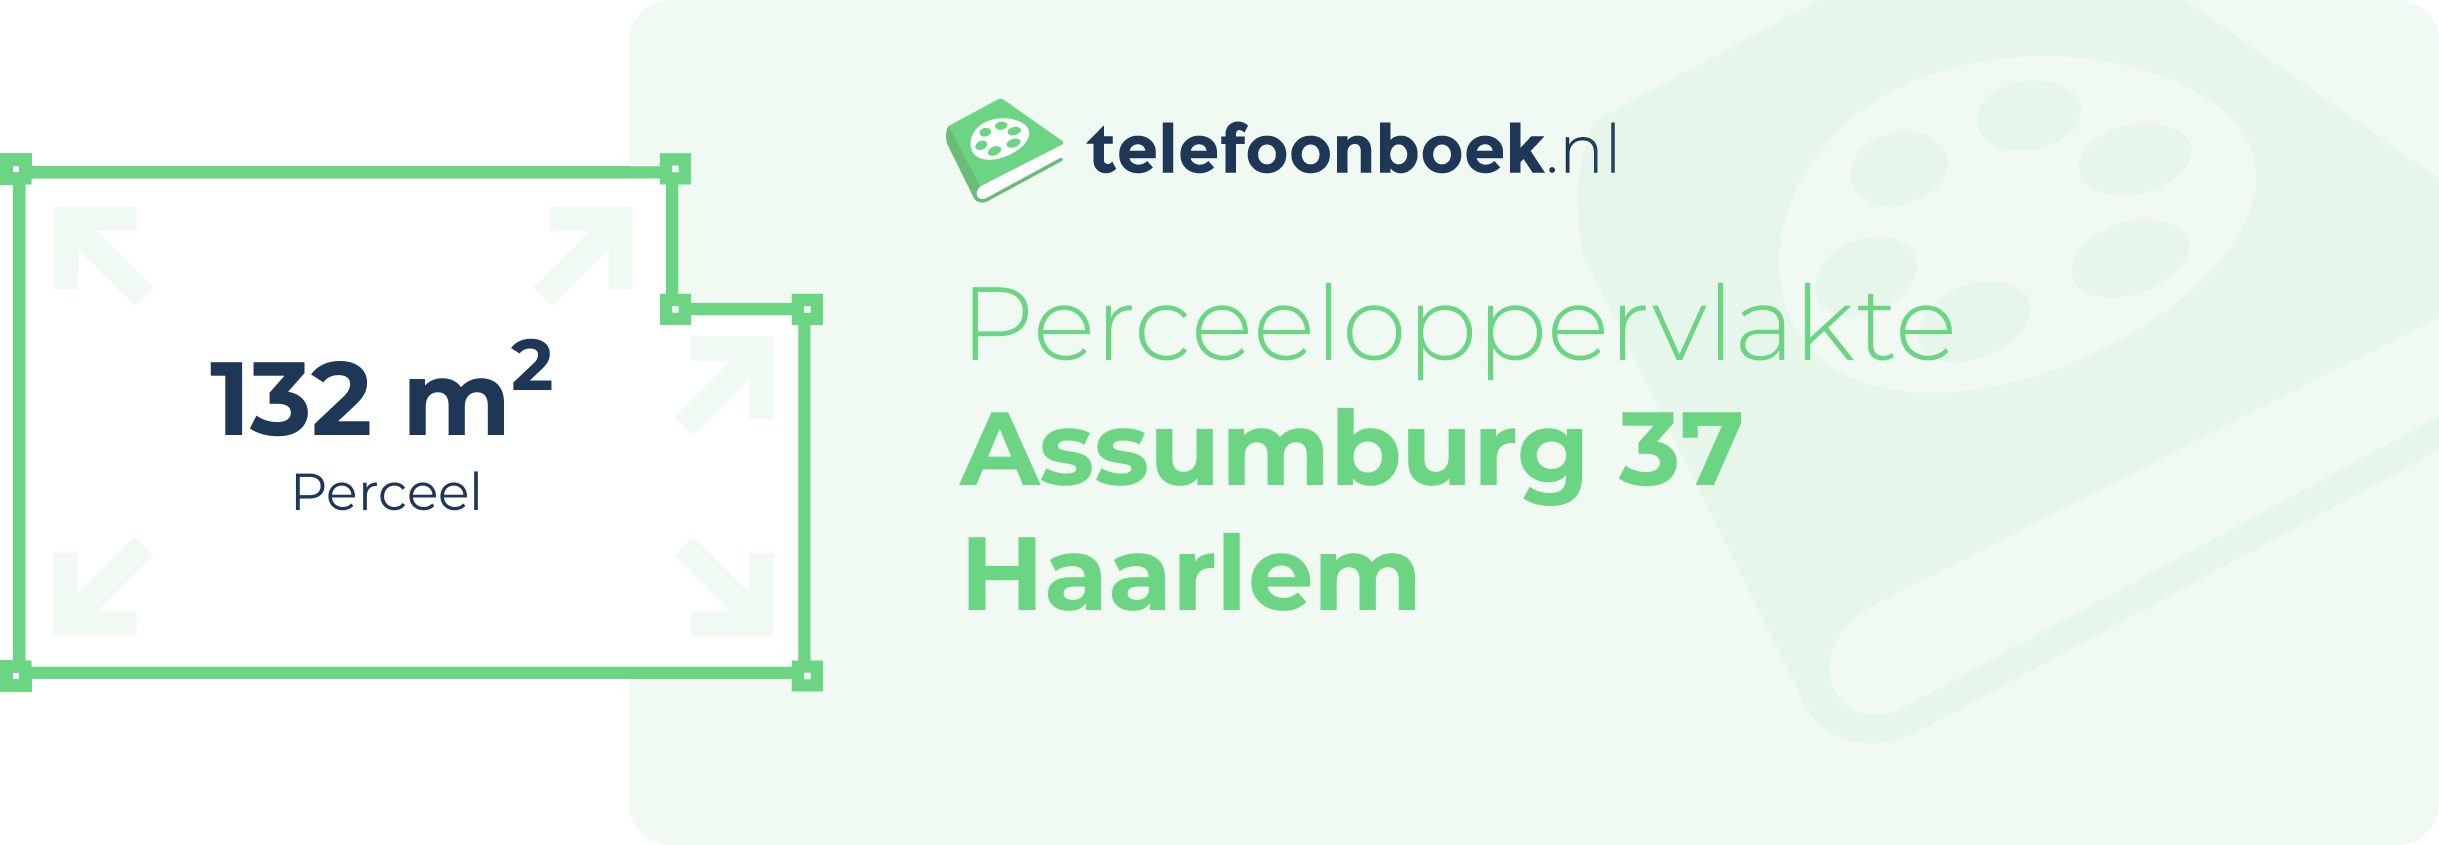 Perceeloppervlakte Assumburg 37 Haarlem